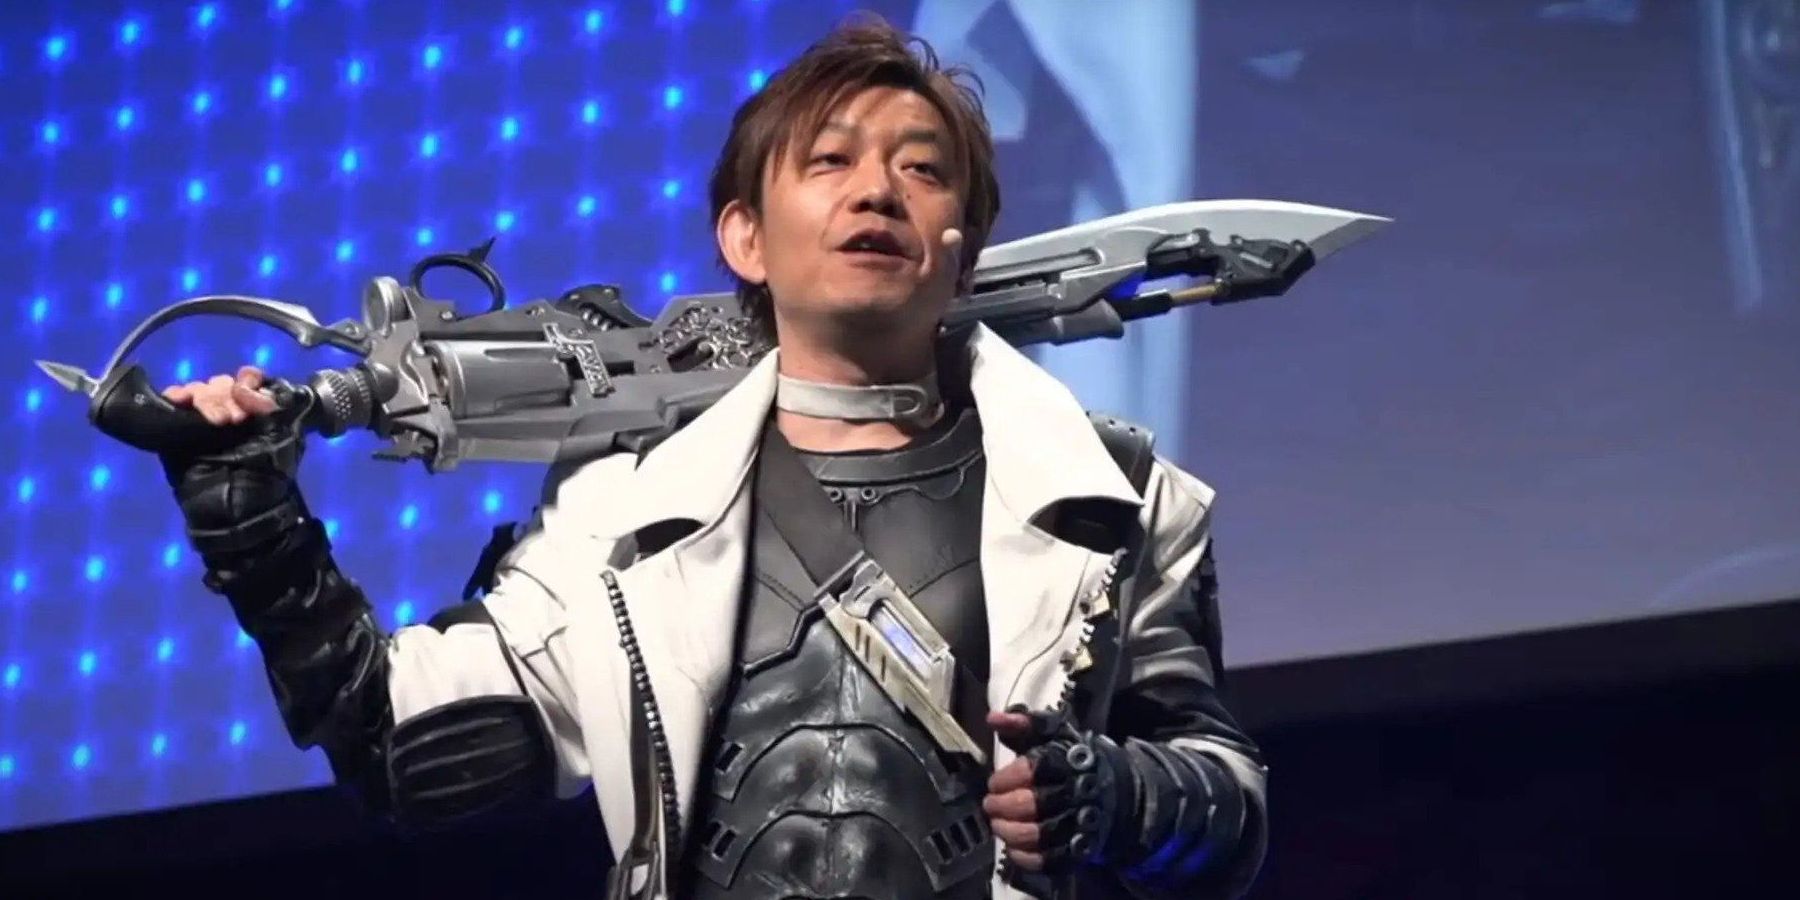 Naoki Yoshida with a Gunblade over his shoulder at a Final Fantasy XIV event